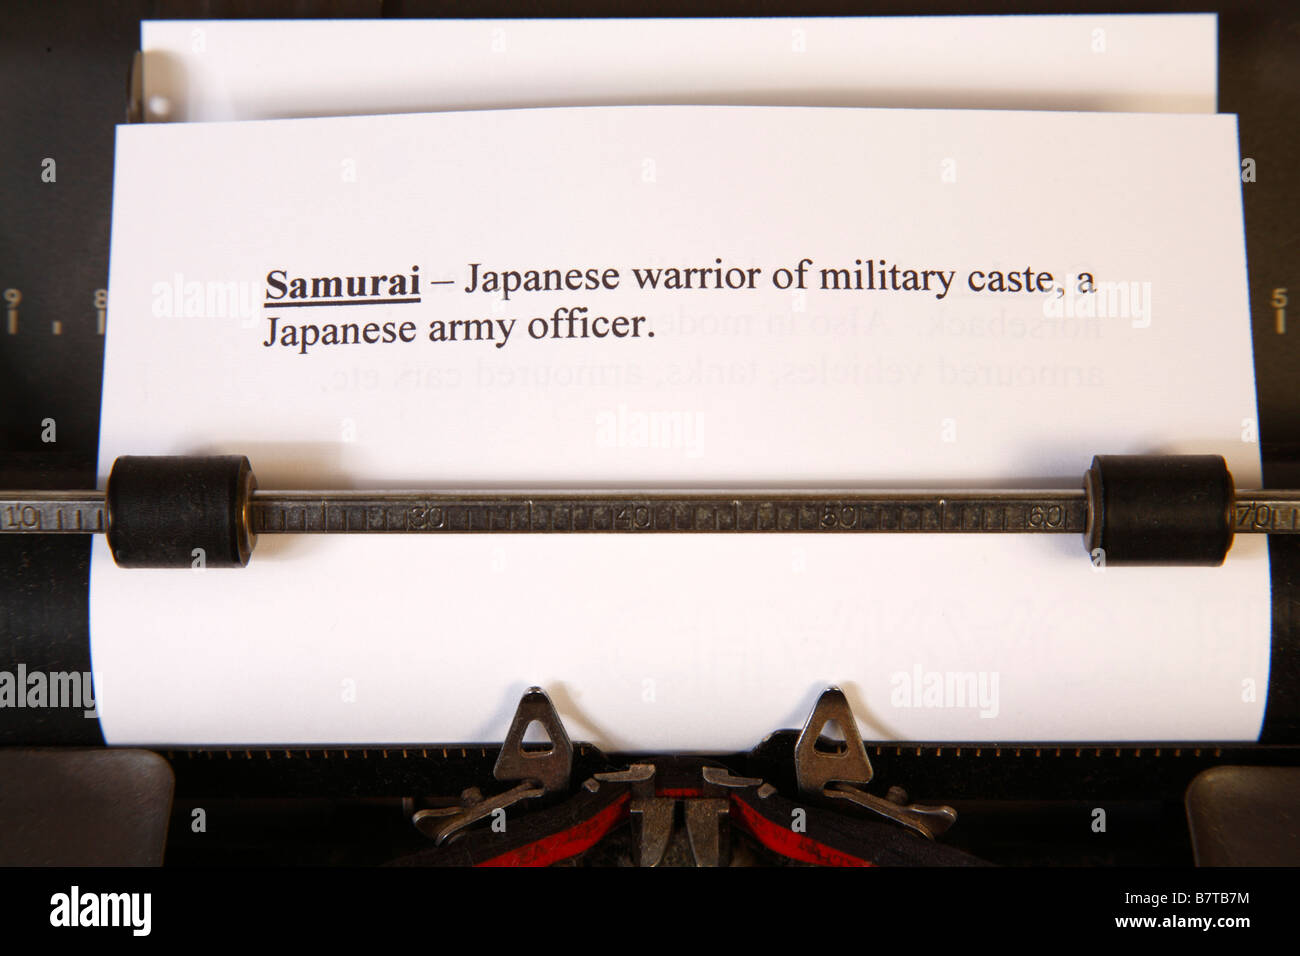 Definizione di Samurai in macchina da scrivere Foto Stock